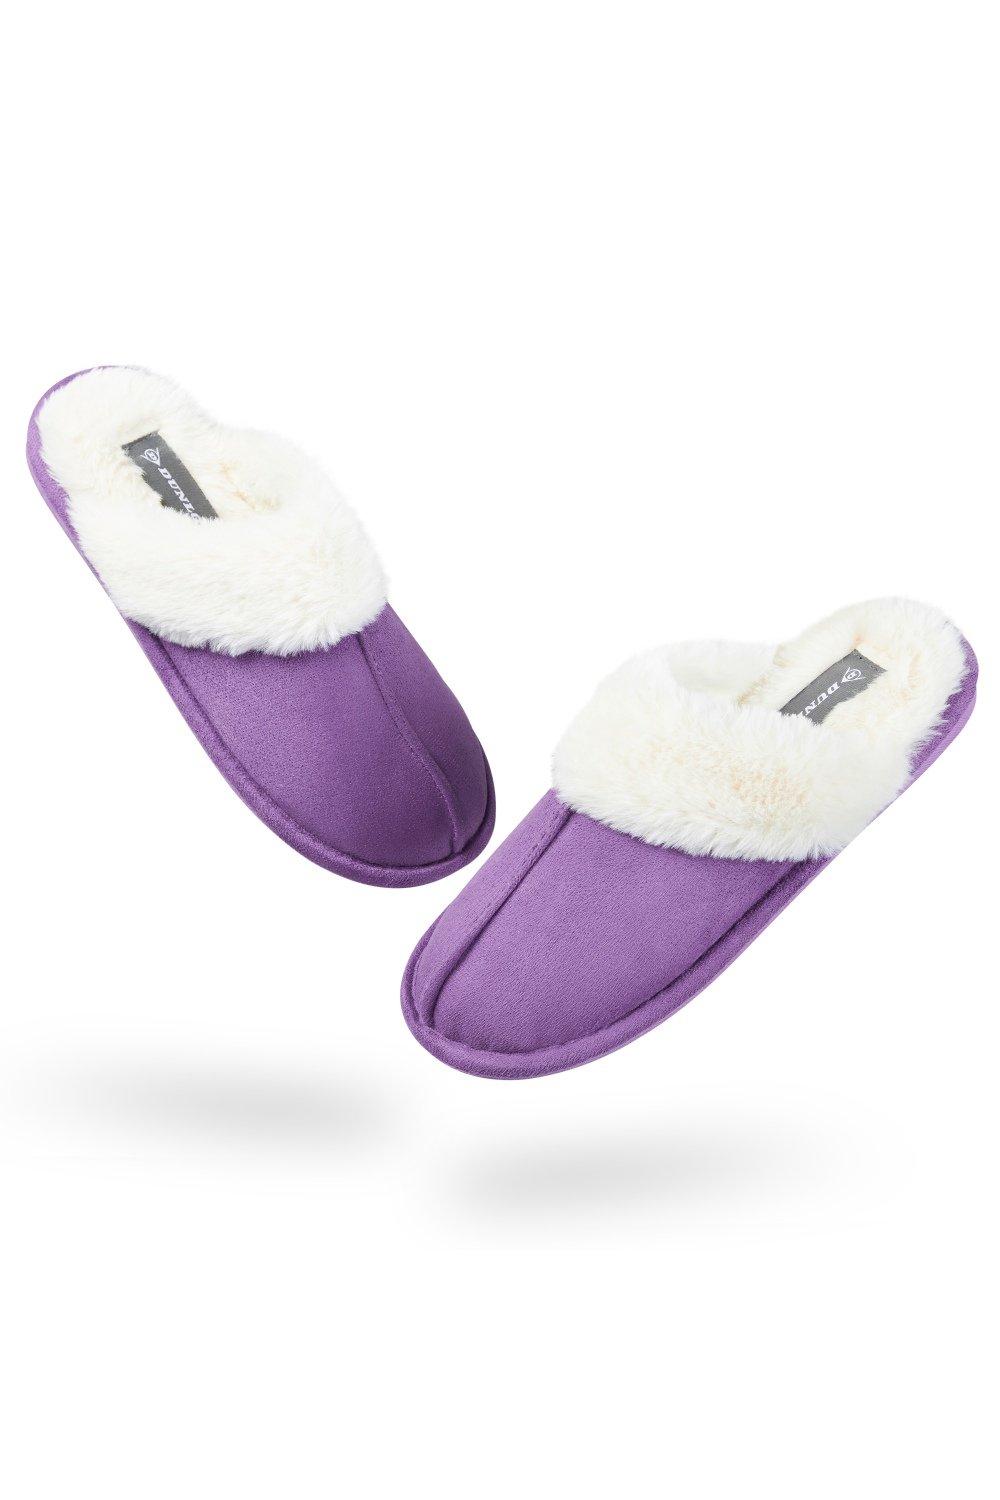 Домашние пушистые тапочки на толстой меховой подкладке Dunlop, фиолетовый women s slippers soft fluffy plush slippers outdoor baotou muller slippers home flat non slip slippers comfortable casual shoes